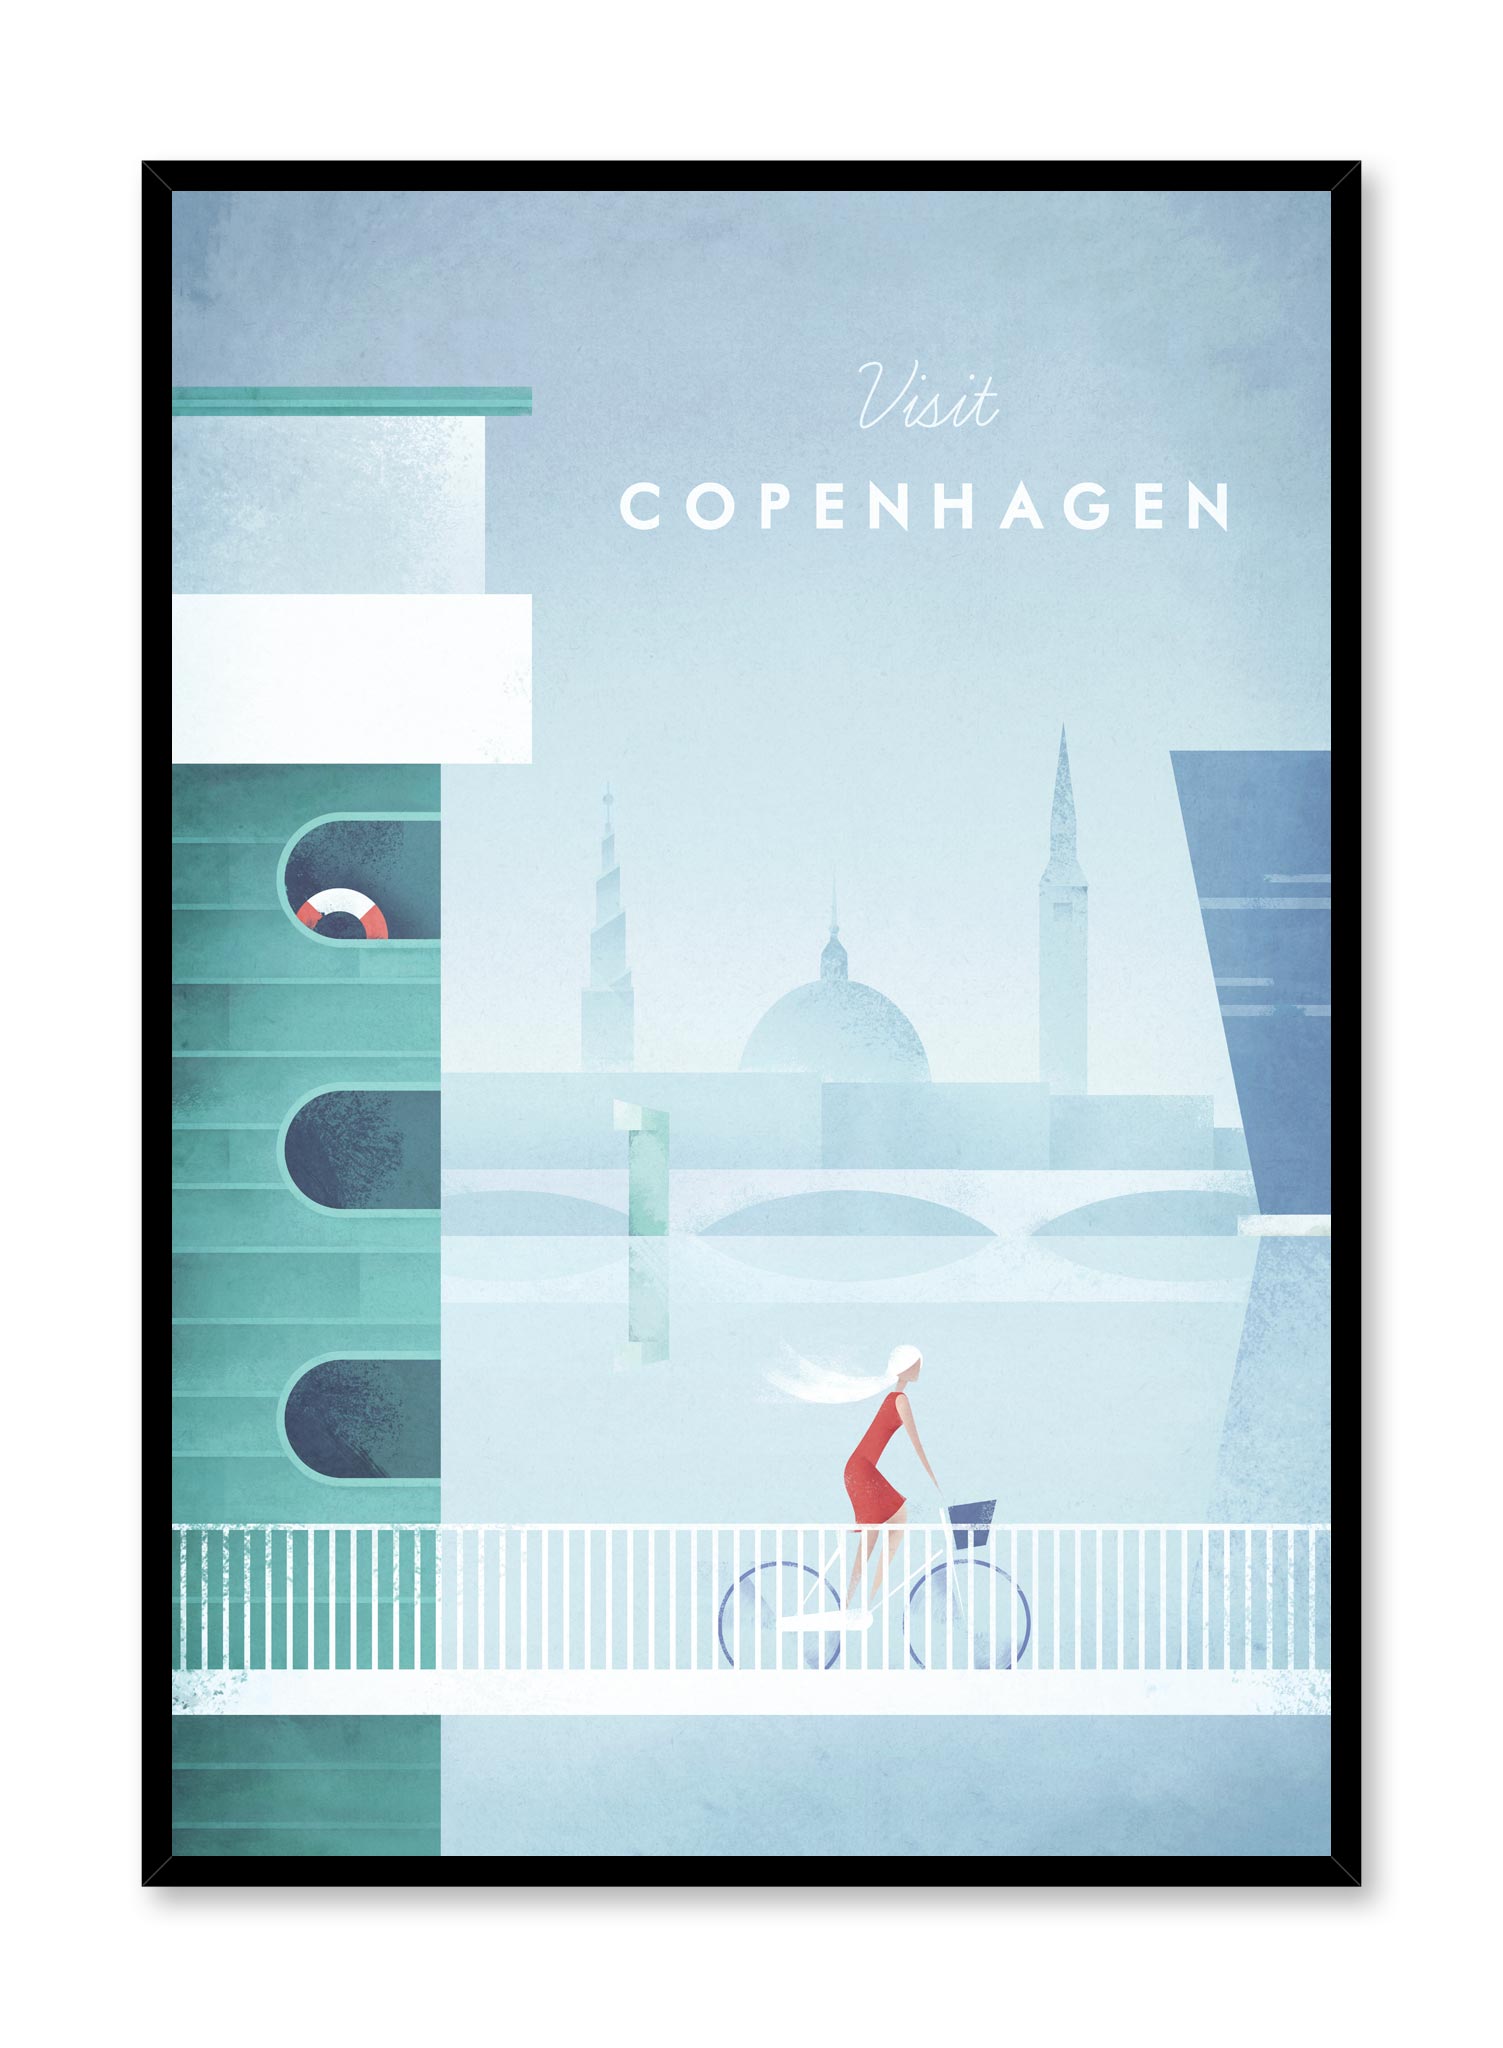 Modern minimalist travel poster by Opposite Wall with illustration of Copenhagen, Denmark